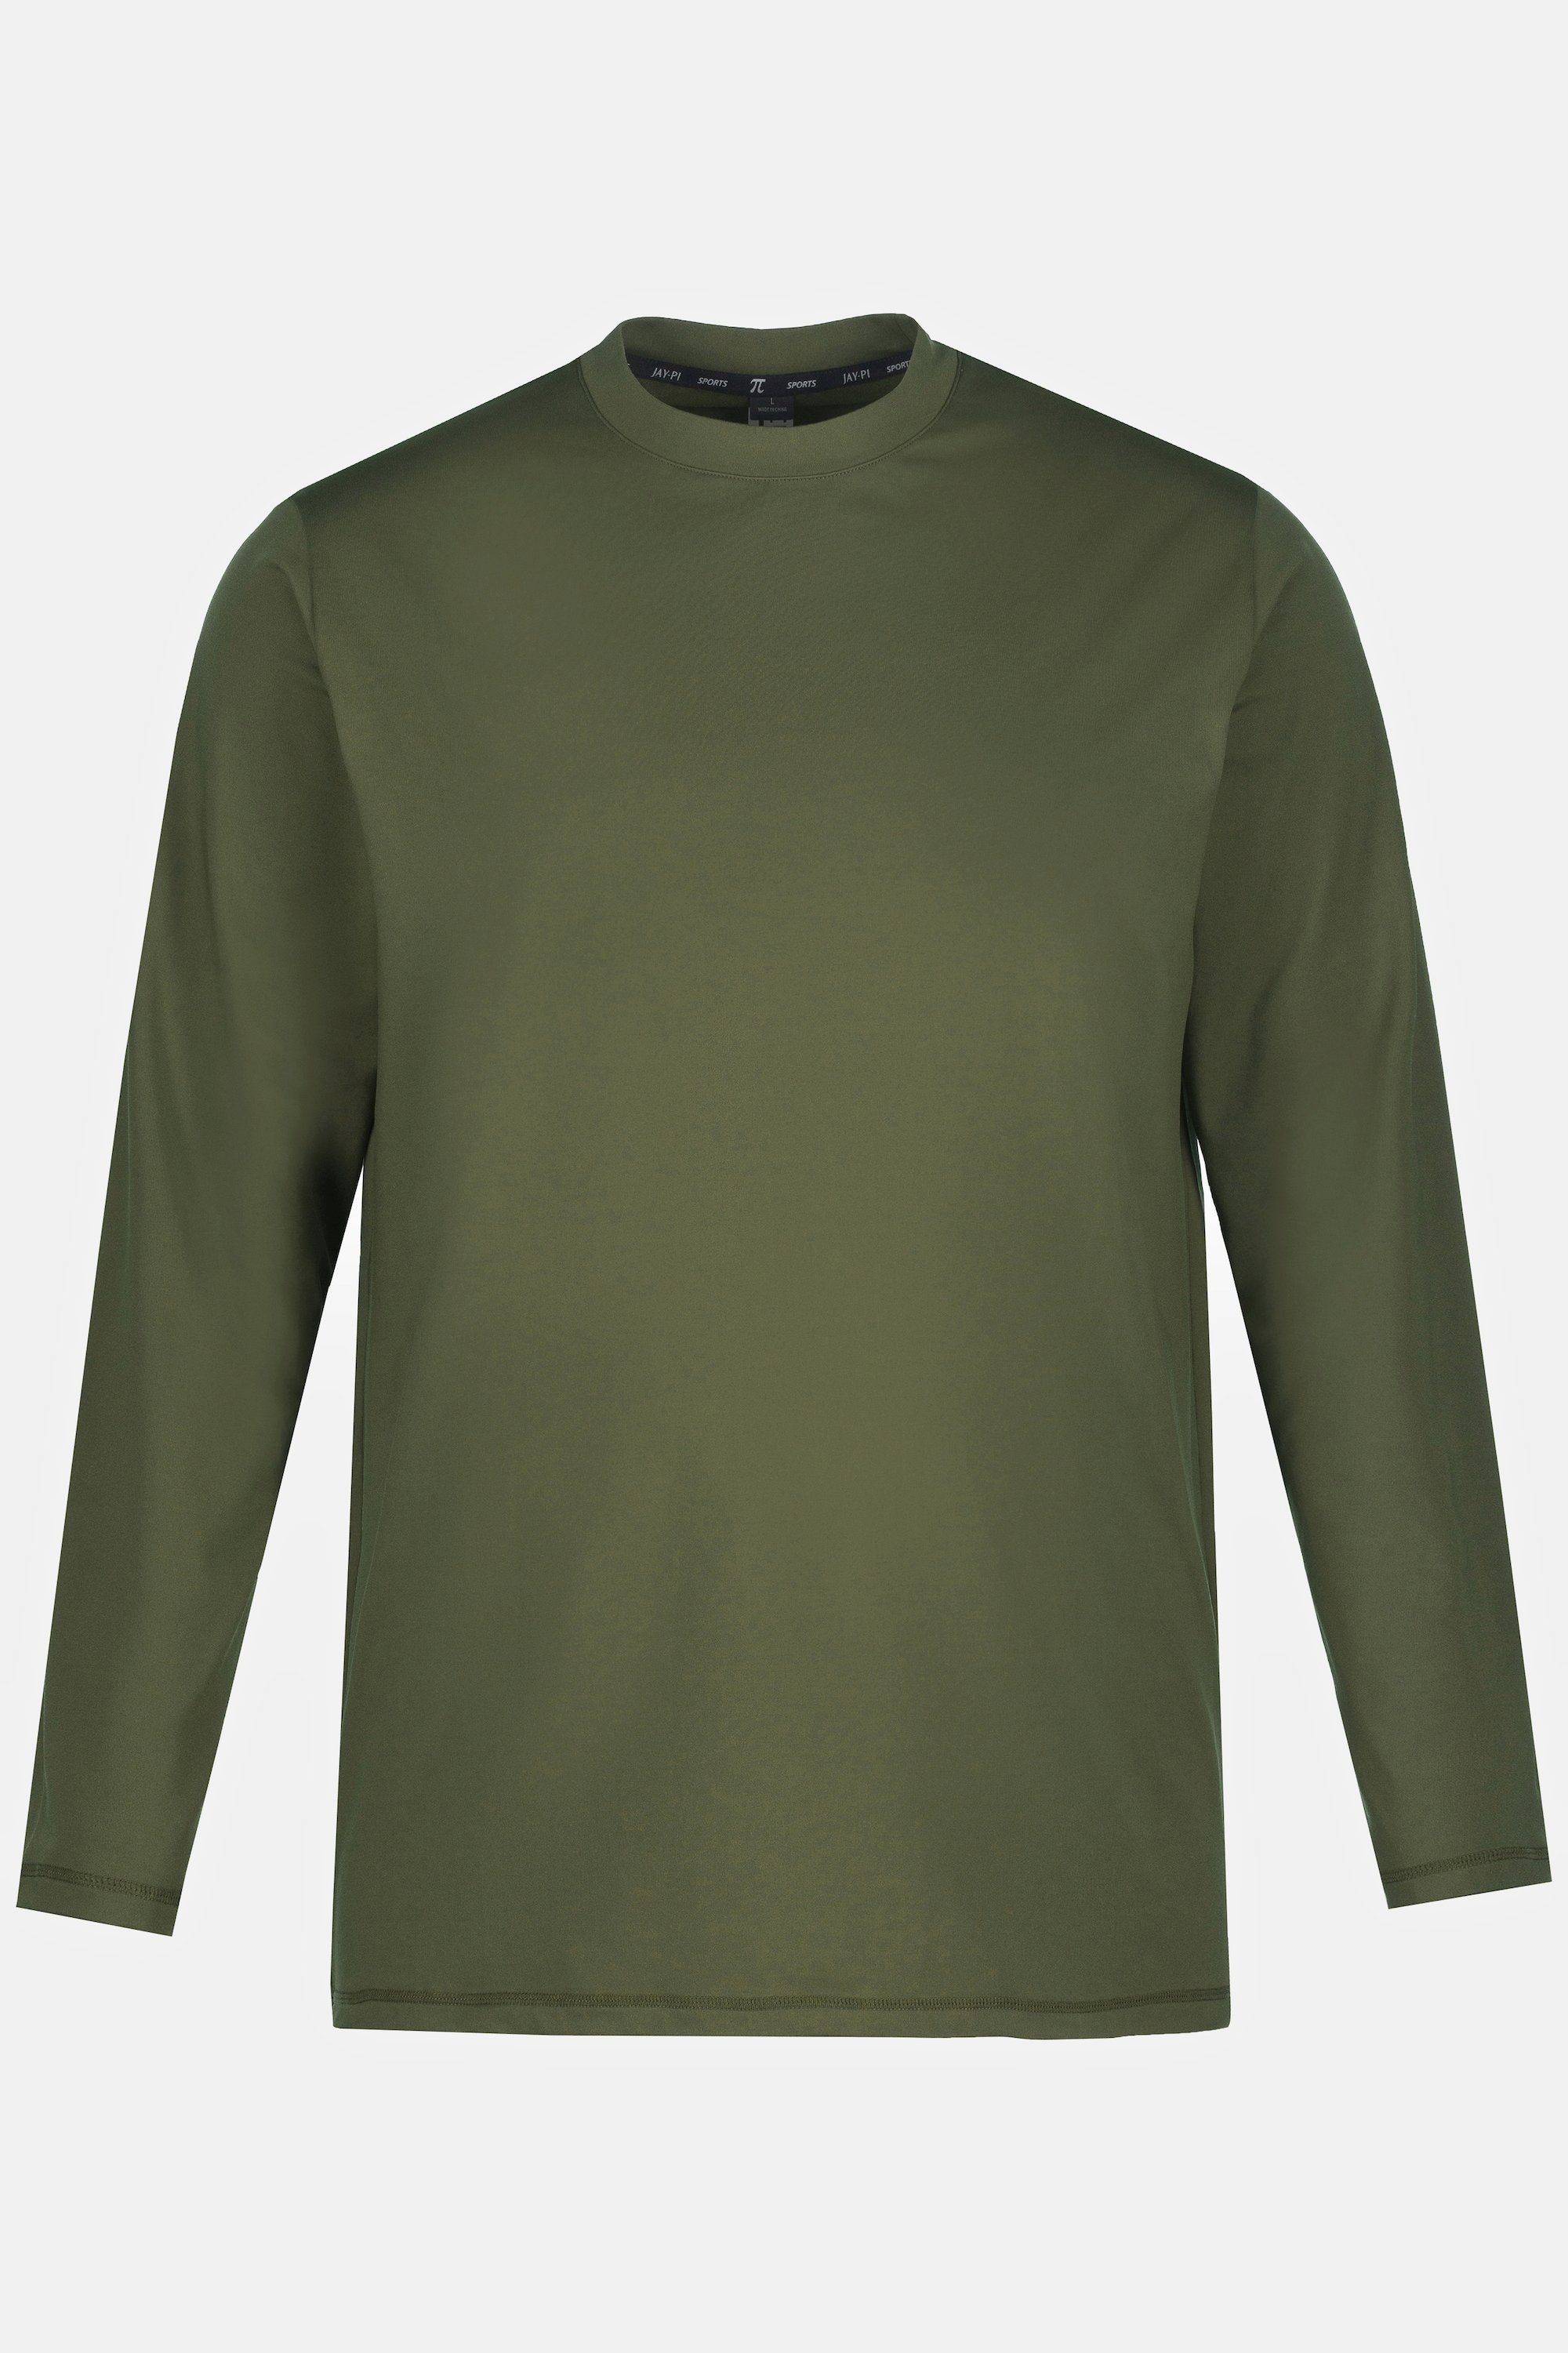 JP1880 Unterhemd dunkel khaki Langarm Thermo Skiwear Funktions-Unterhemd